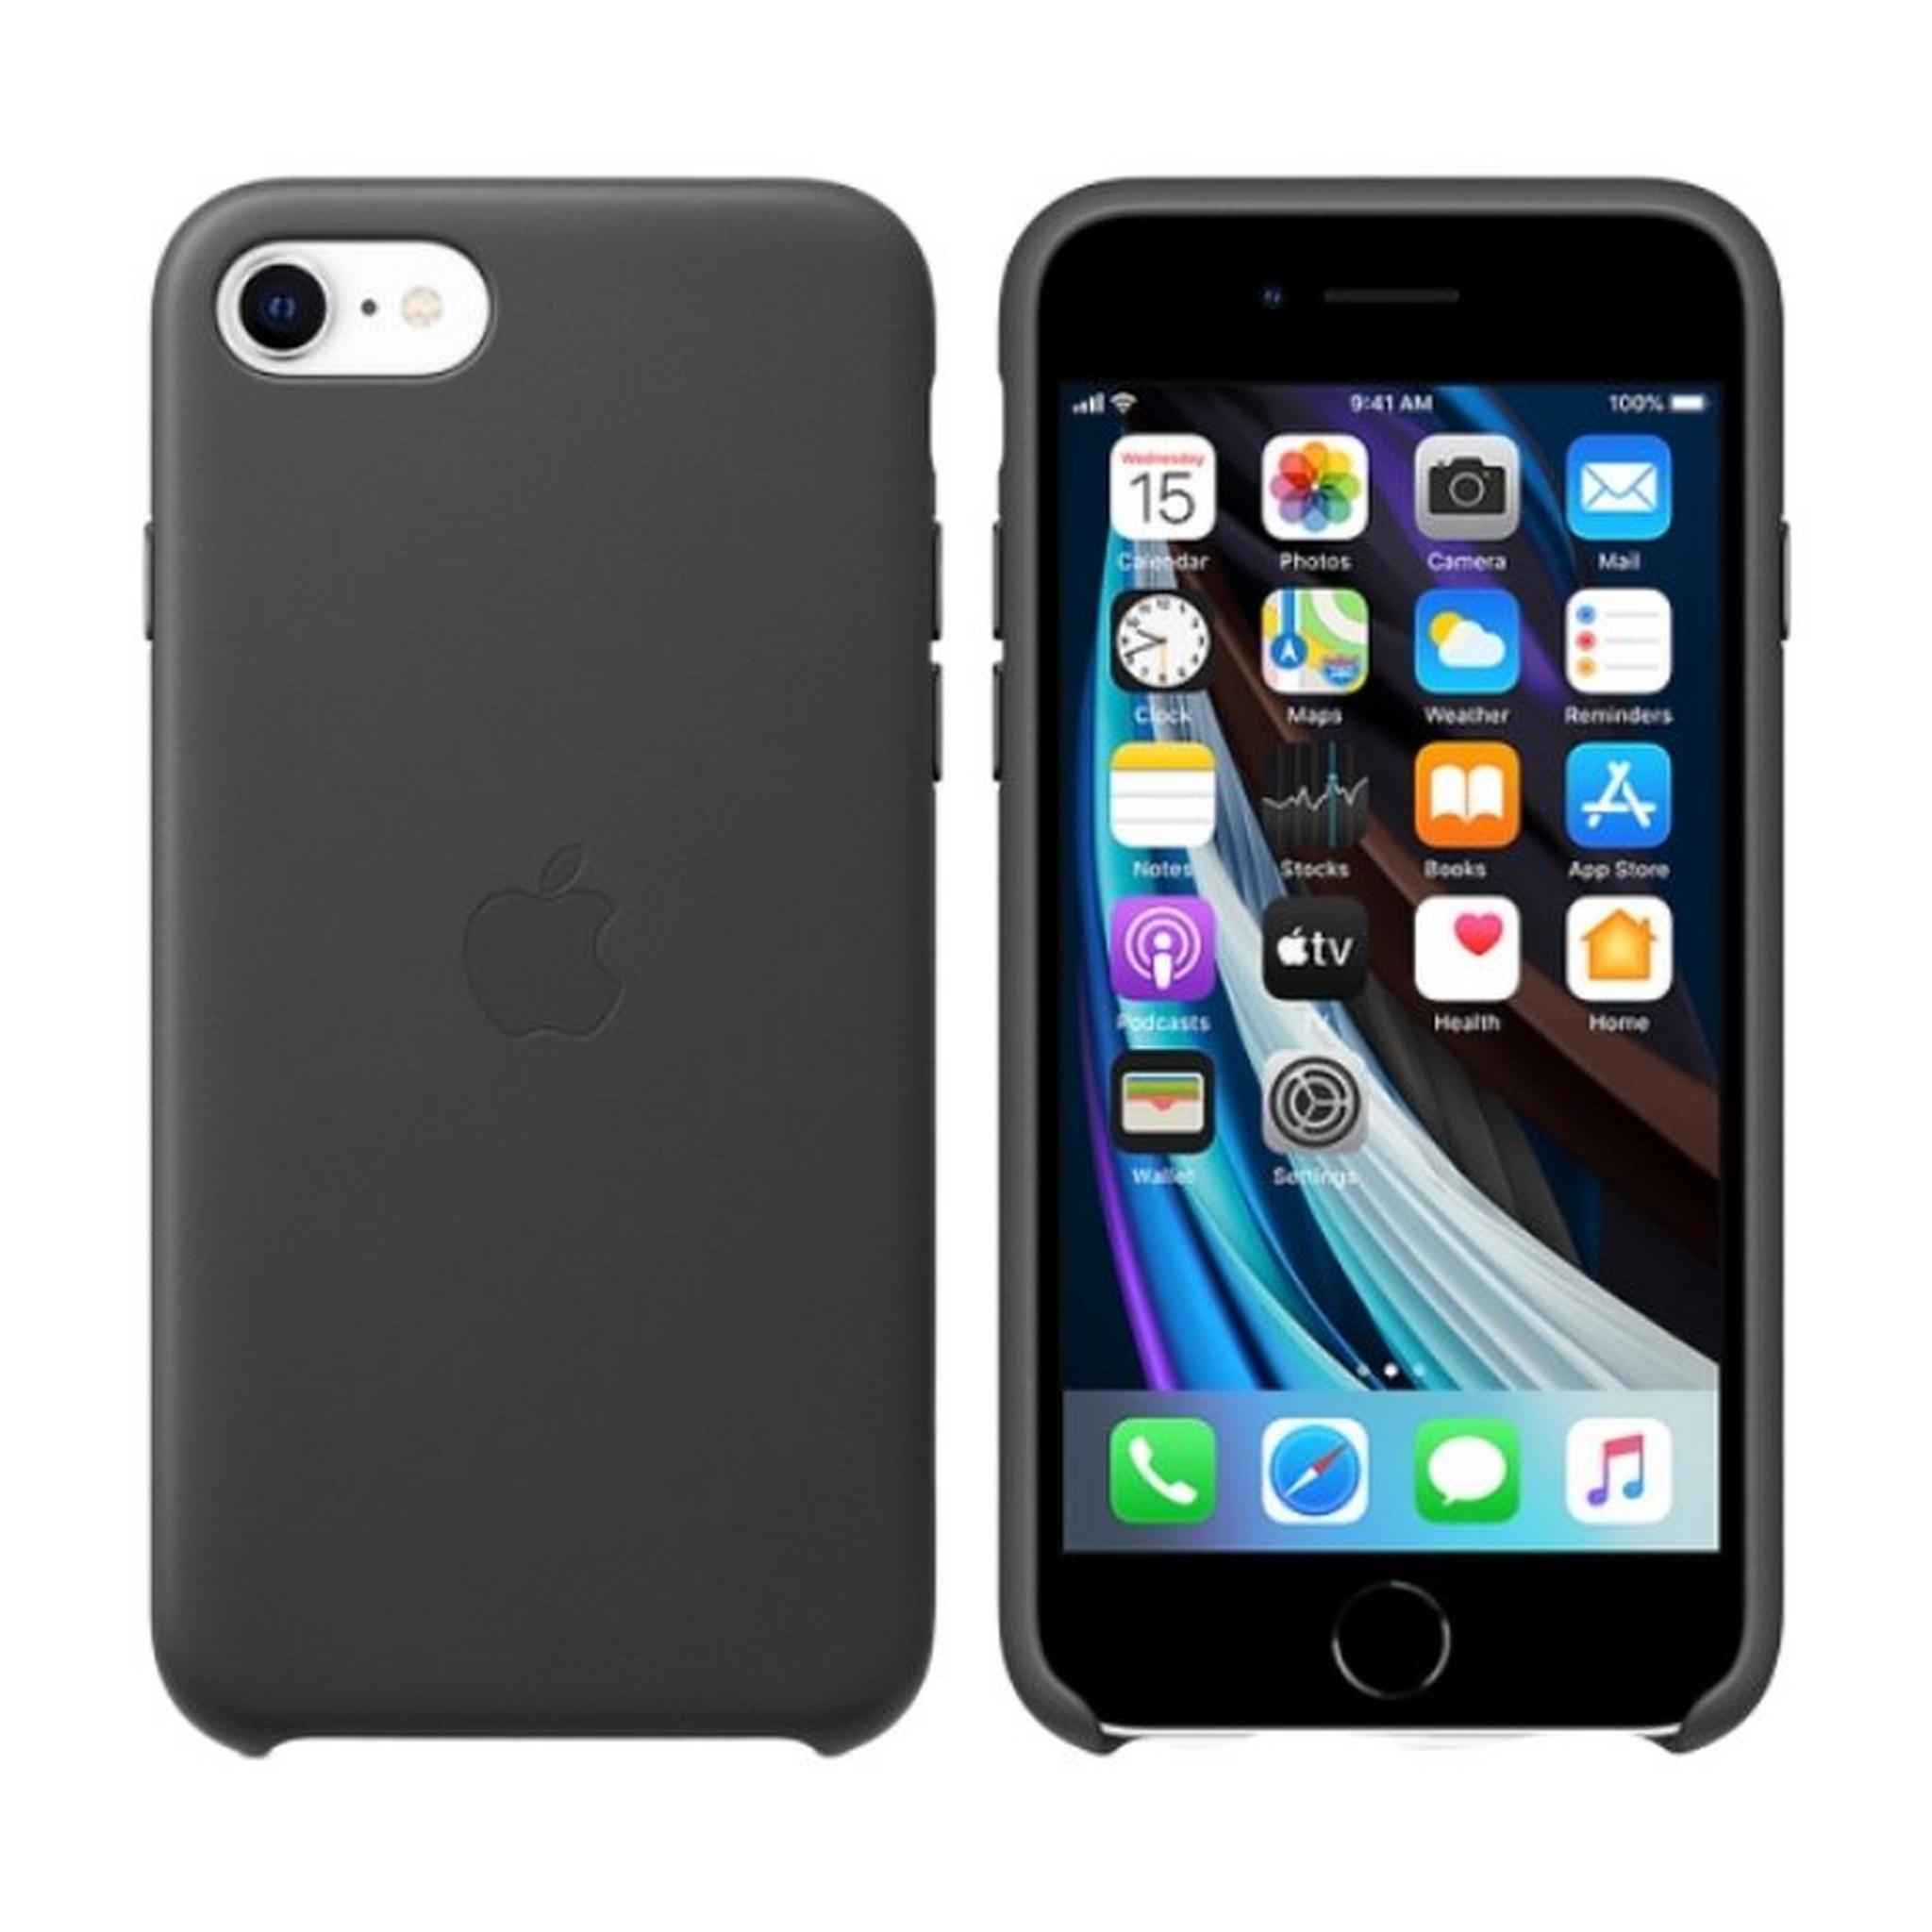 Apple iPhone SE Leather Case - Black